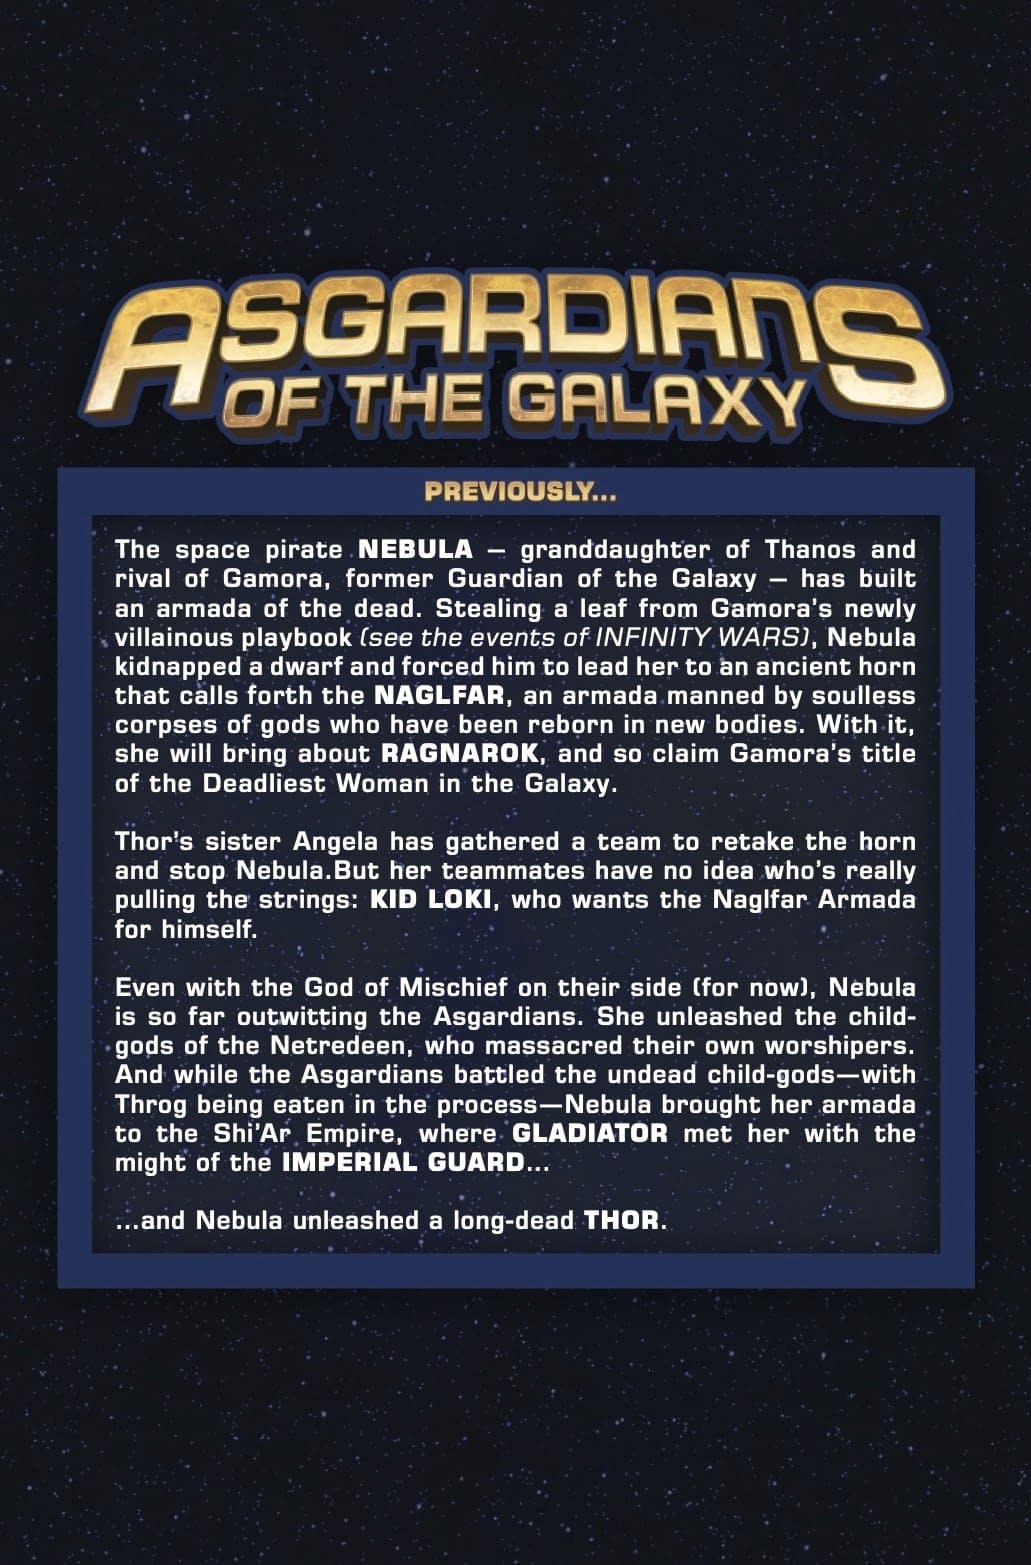 Strange Asgardian Rites of Passage Revealed in Next Week's Asgardians of the Galaxy #3